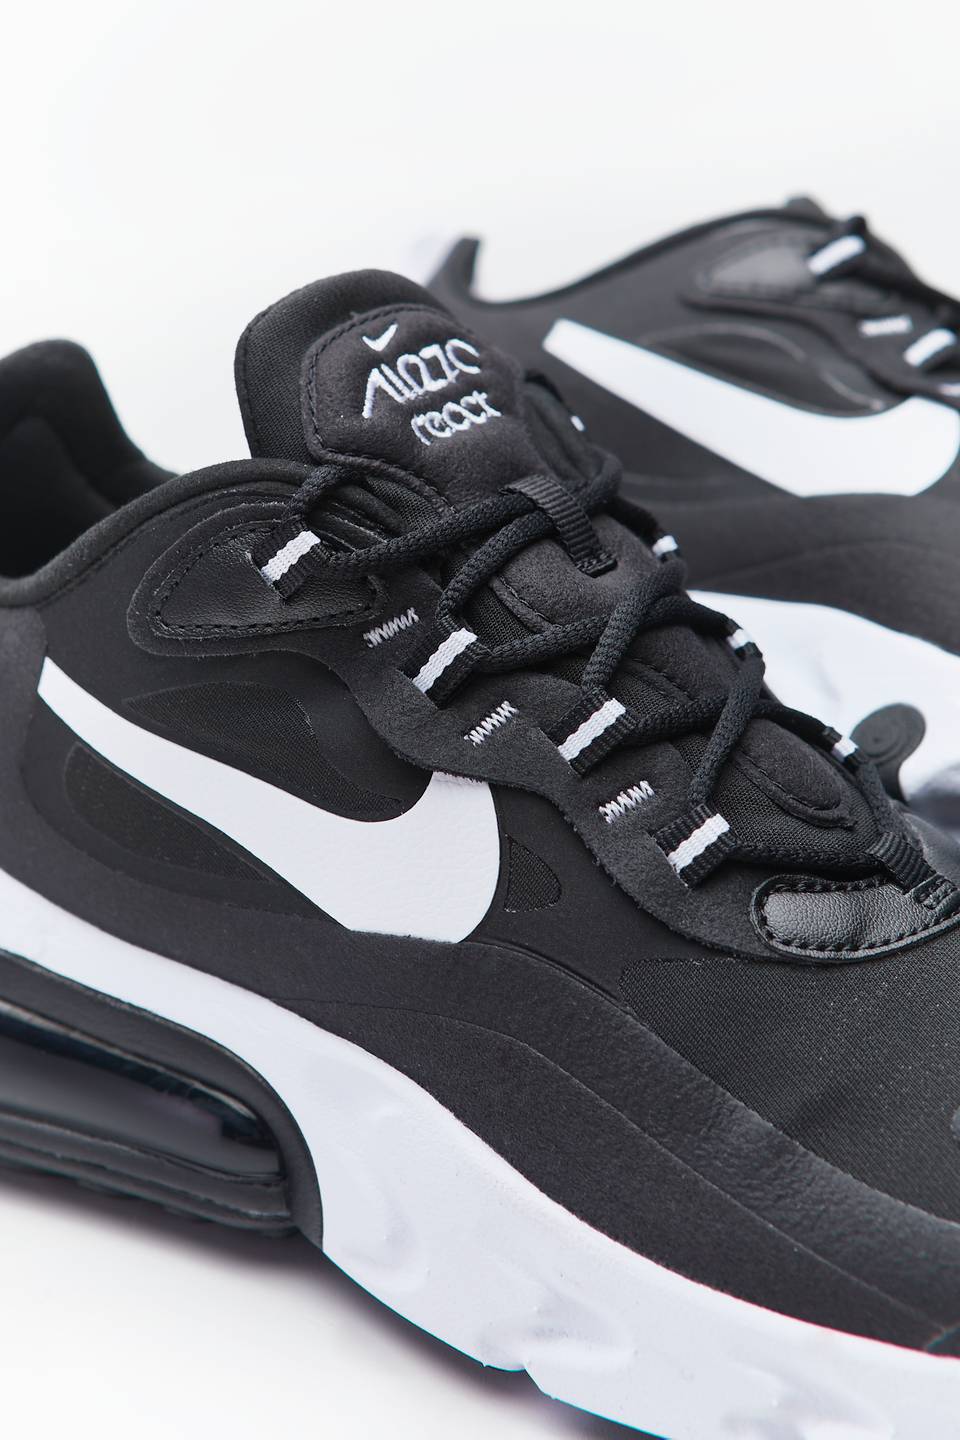 Sneakers Nike AIR MAX 270 REACT 004 BLACK/WHITE/BLACK